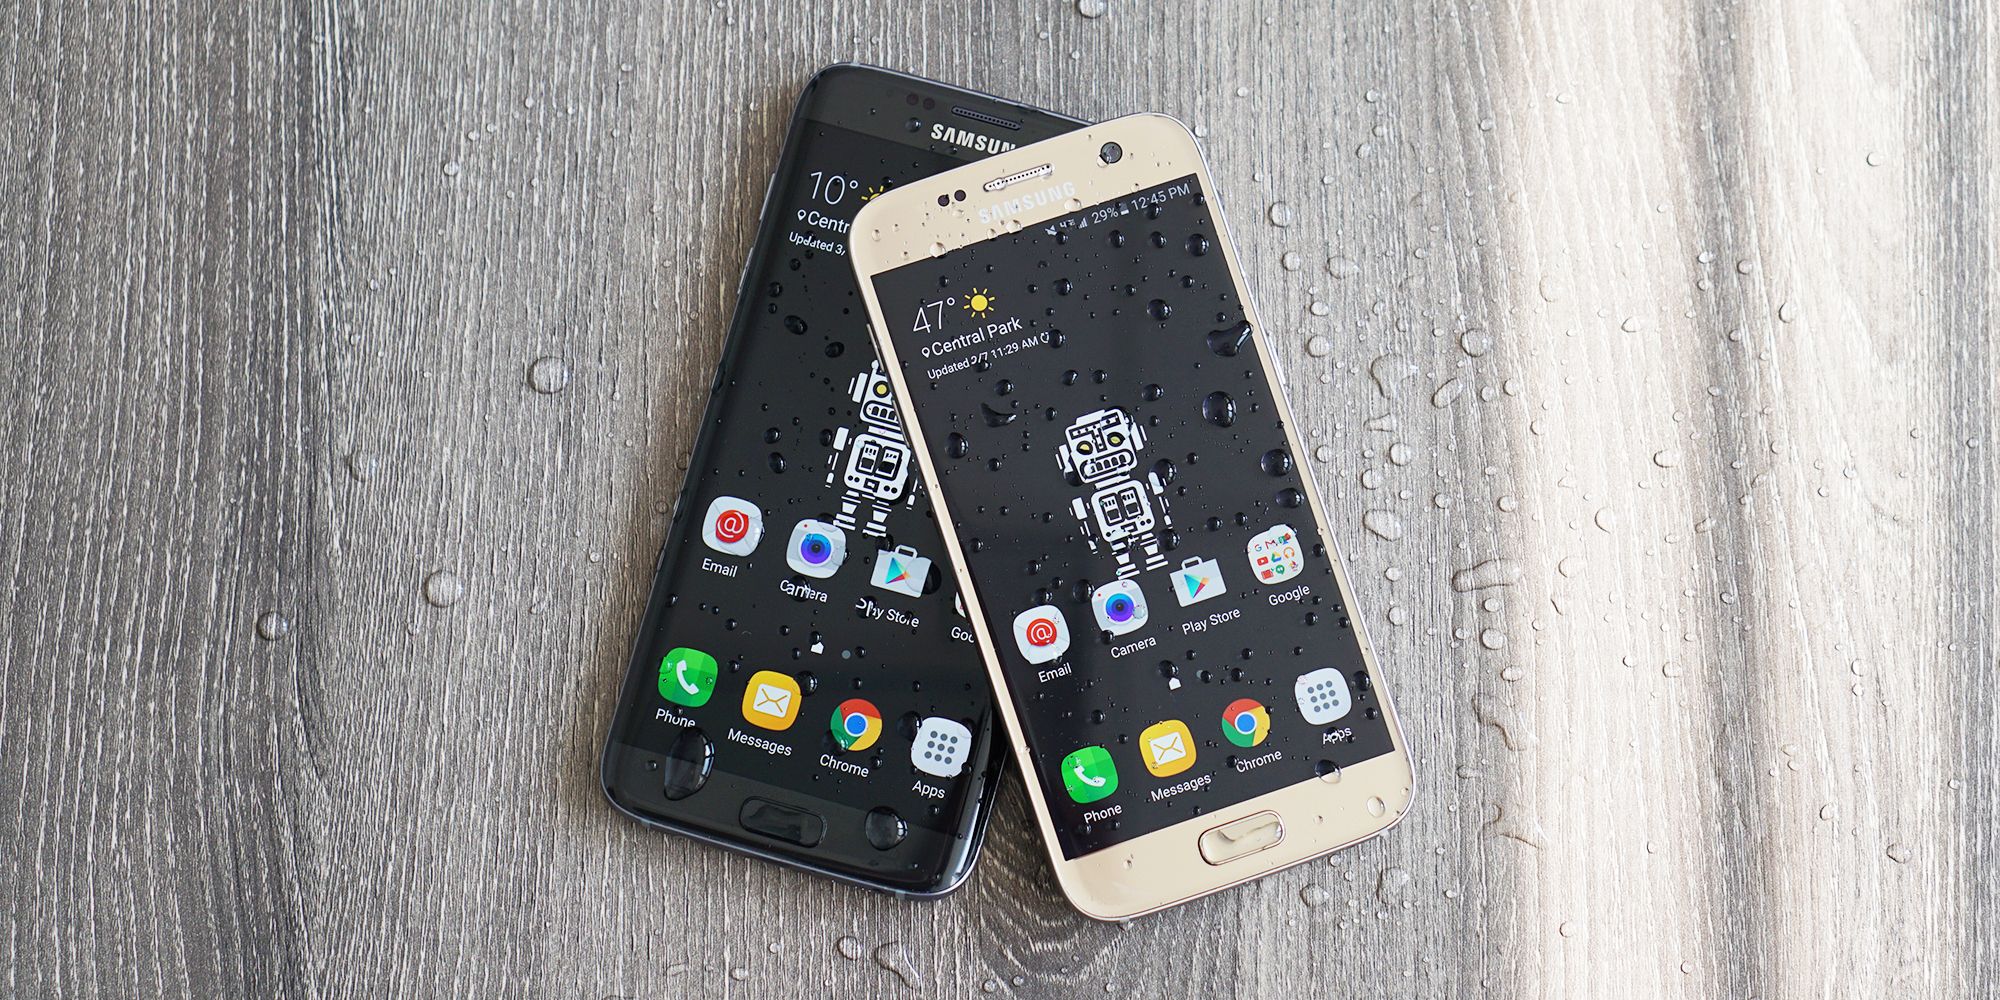 Dusver leerling eenvoudig 2018 Samsung Galaxy S7 and S7 Edge Smartphone Review